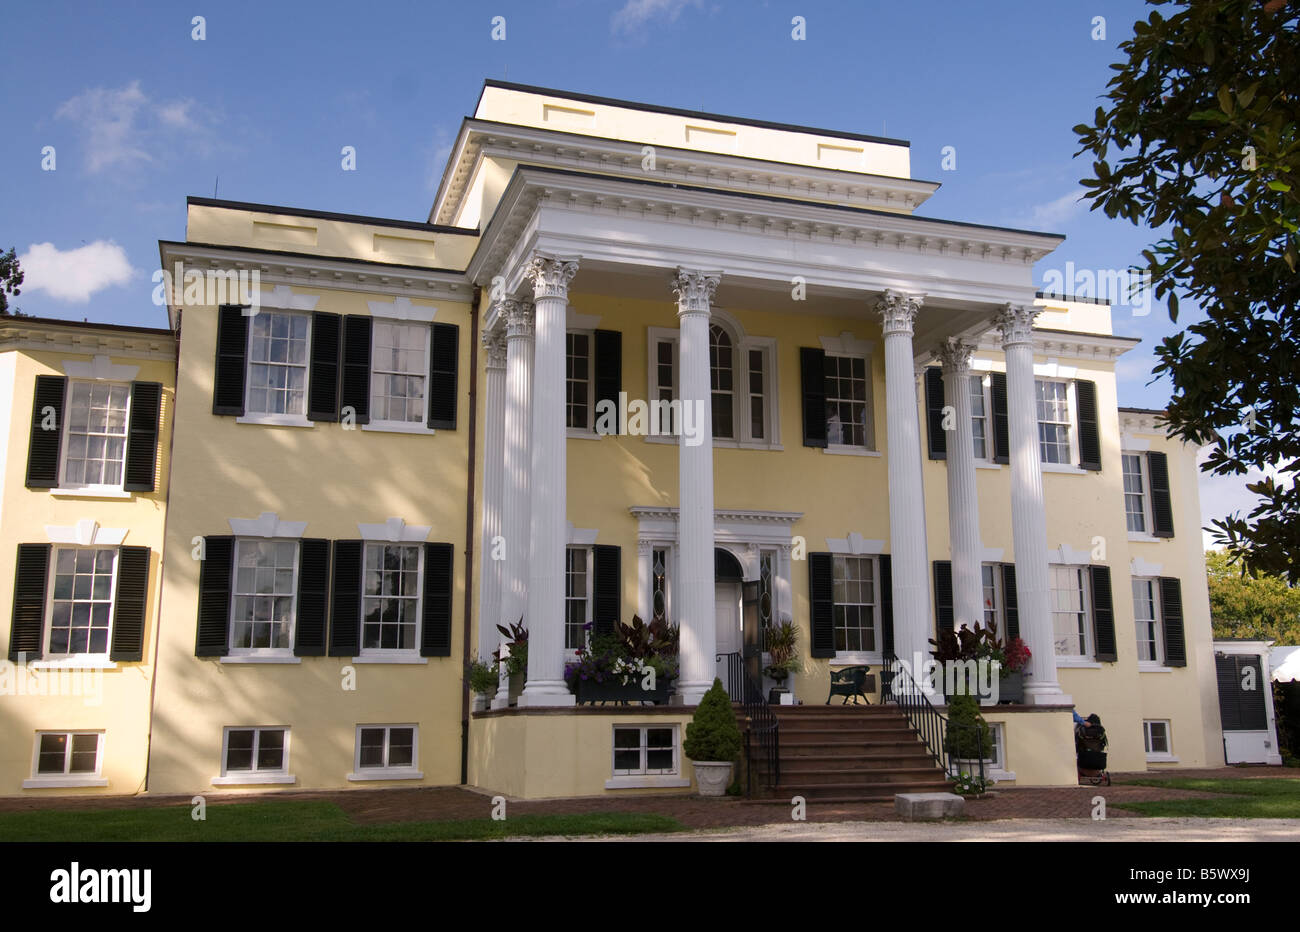 The Greek Revival House at Oatlands, Leesburg, Virginia Stock Photo